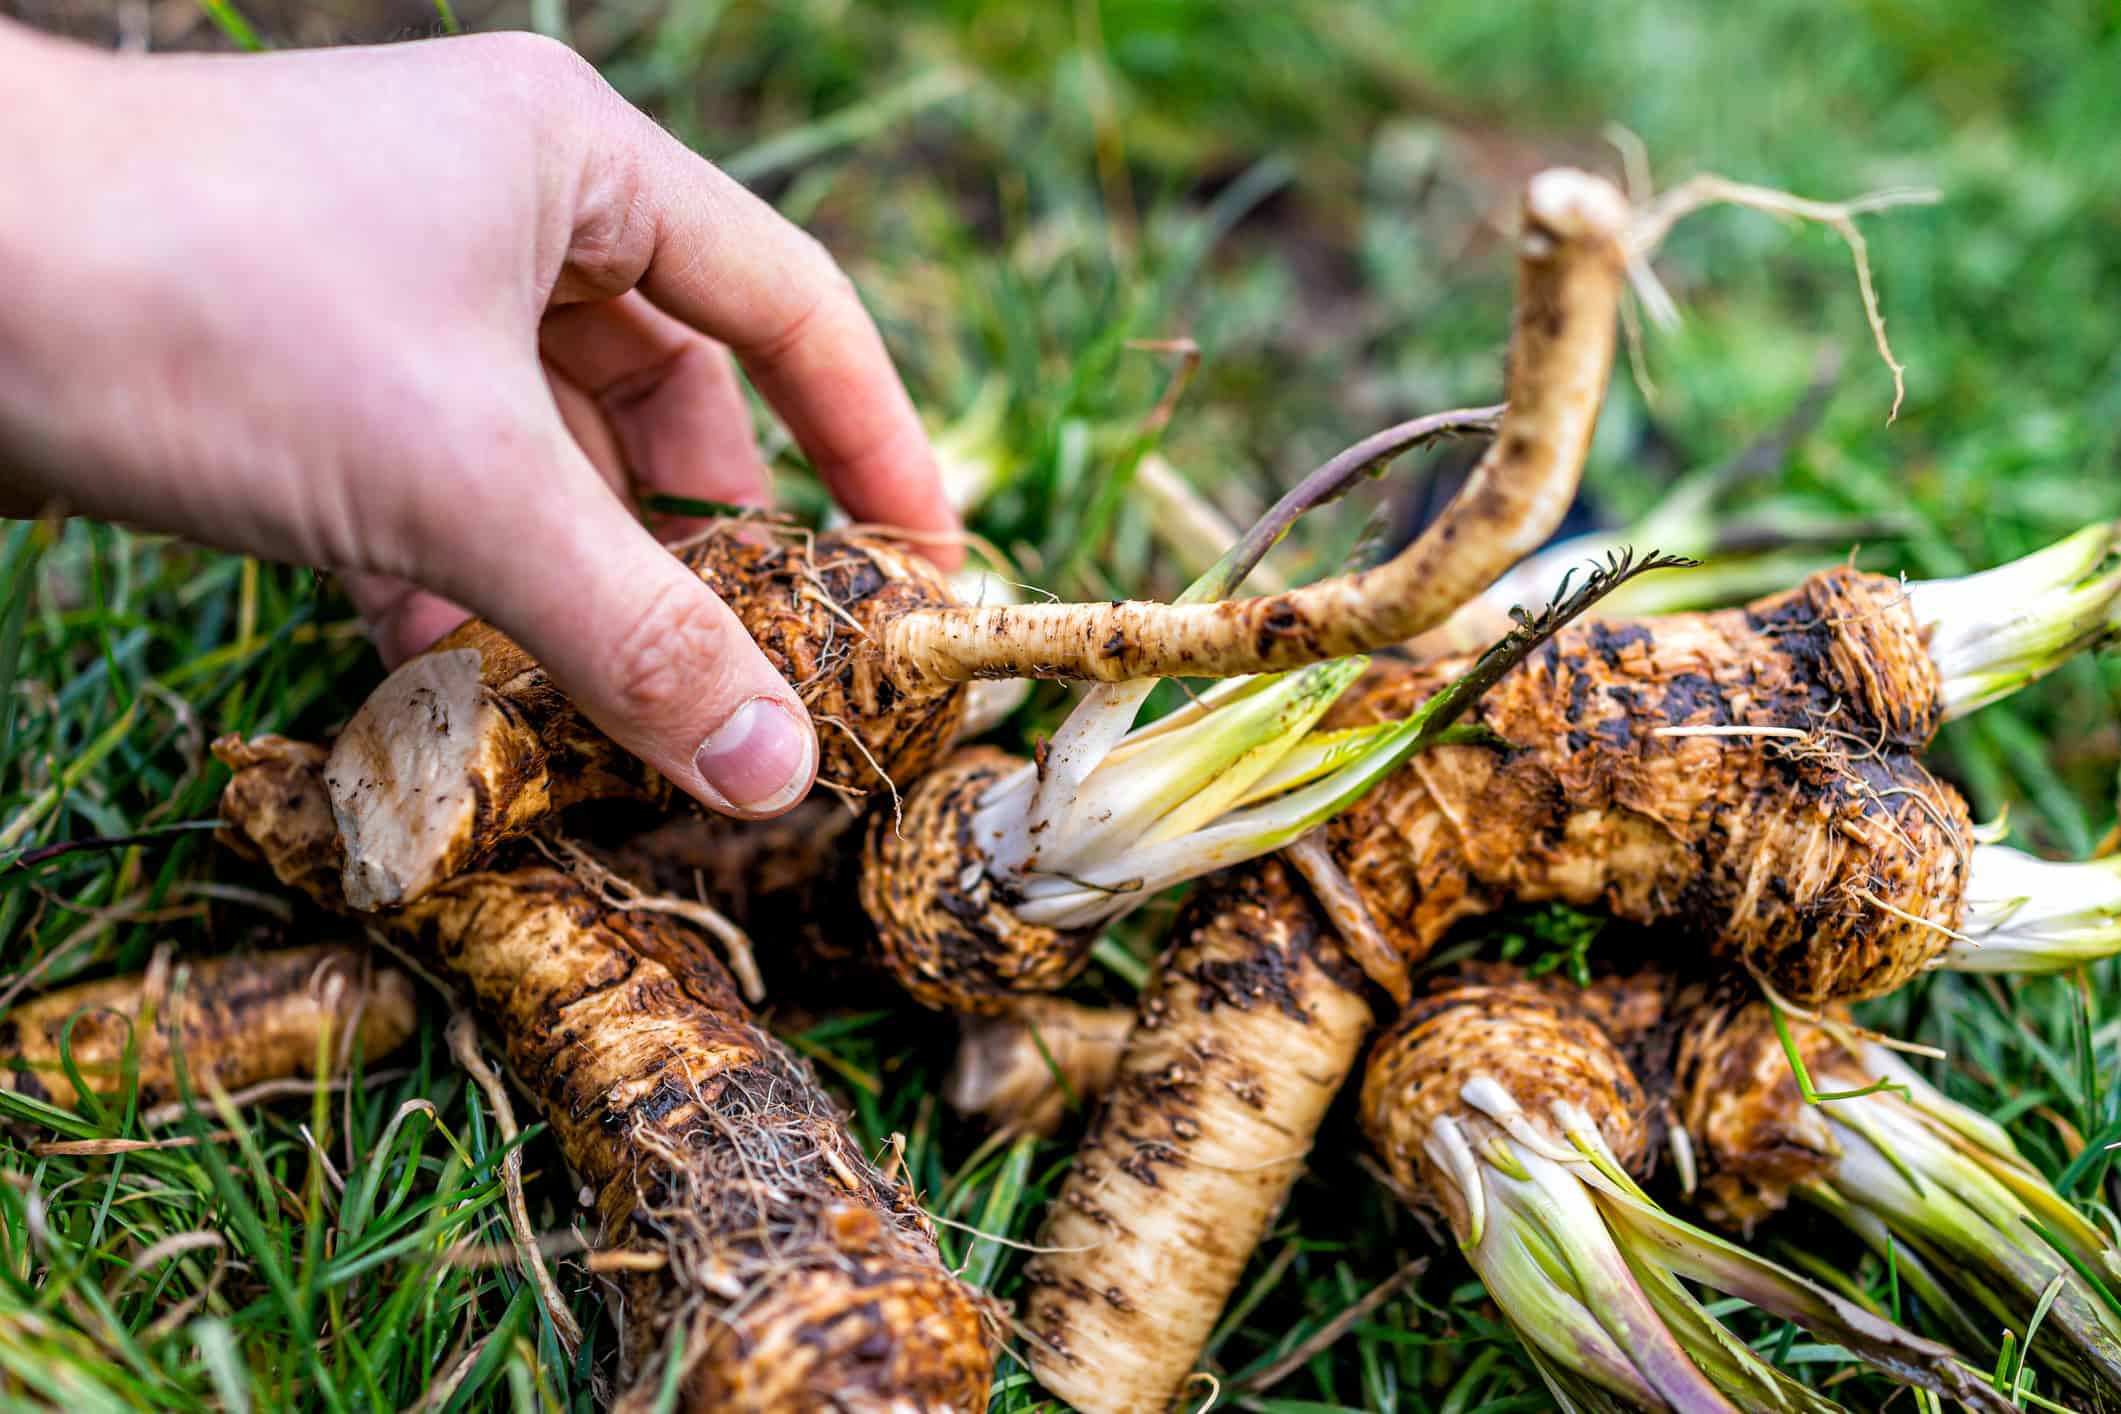 Green grass closeup view with hand holding touching dug up horseradish root in winter vegetable garden in Ukraine dacha